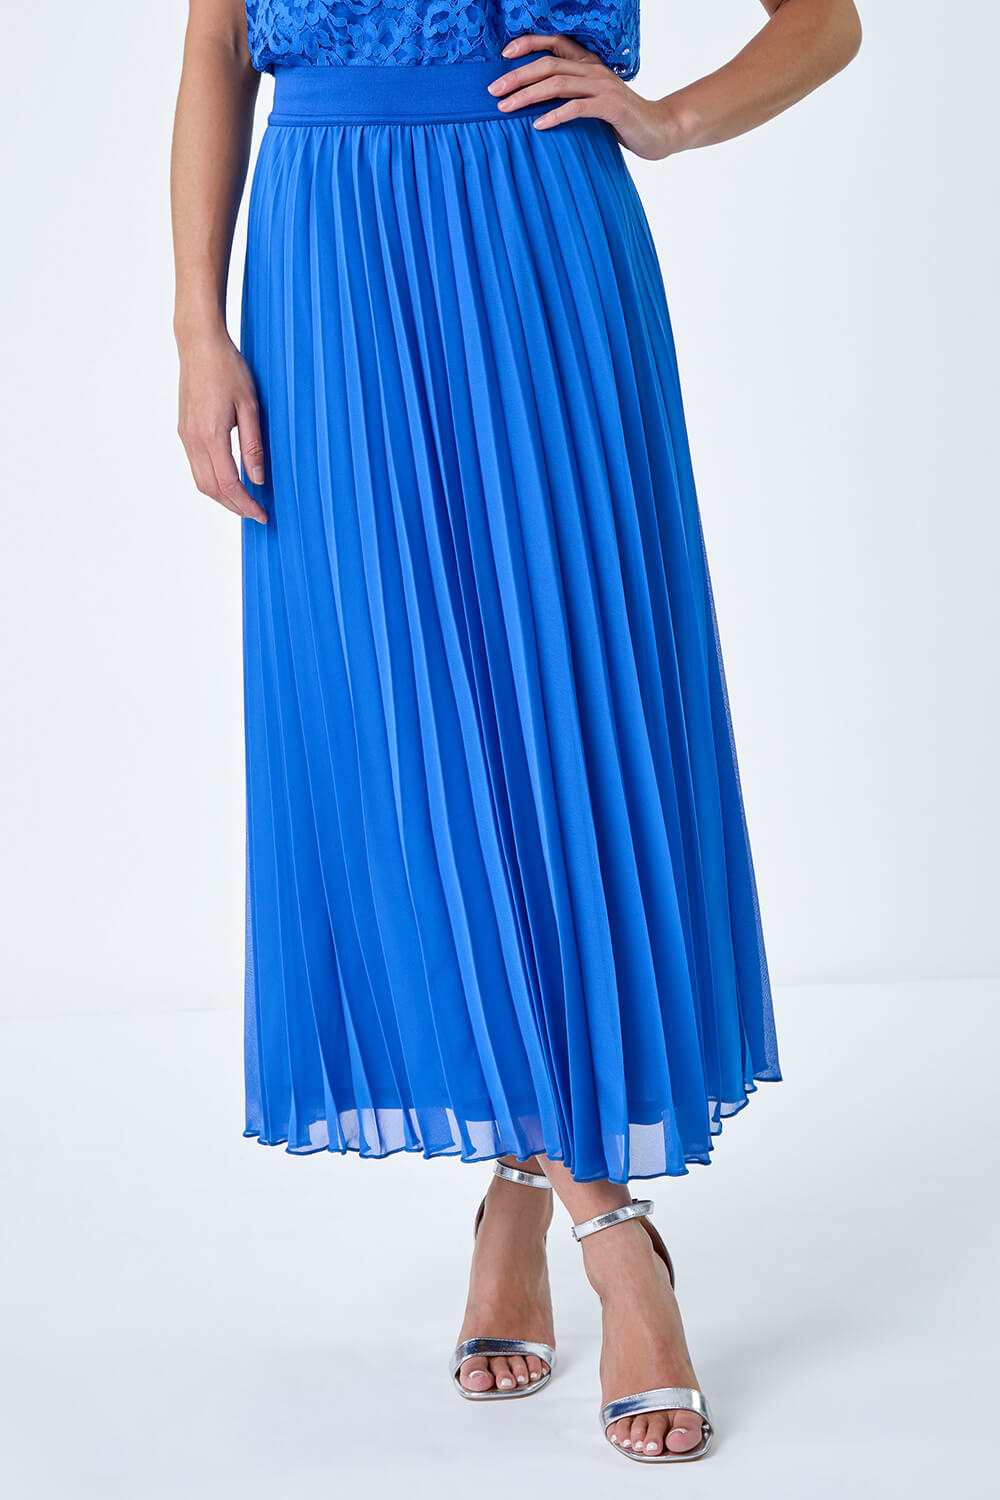 Blue Petite Pleated Premium Maxi Skirt, Image 4 of 5